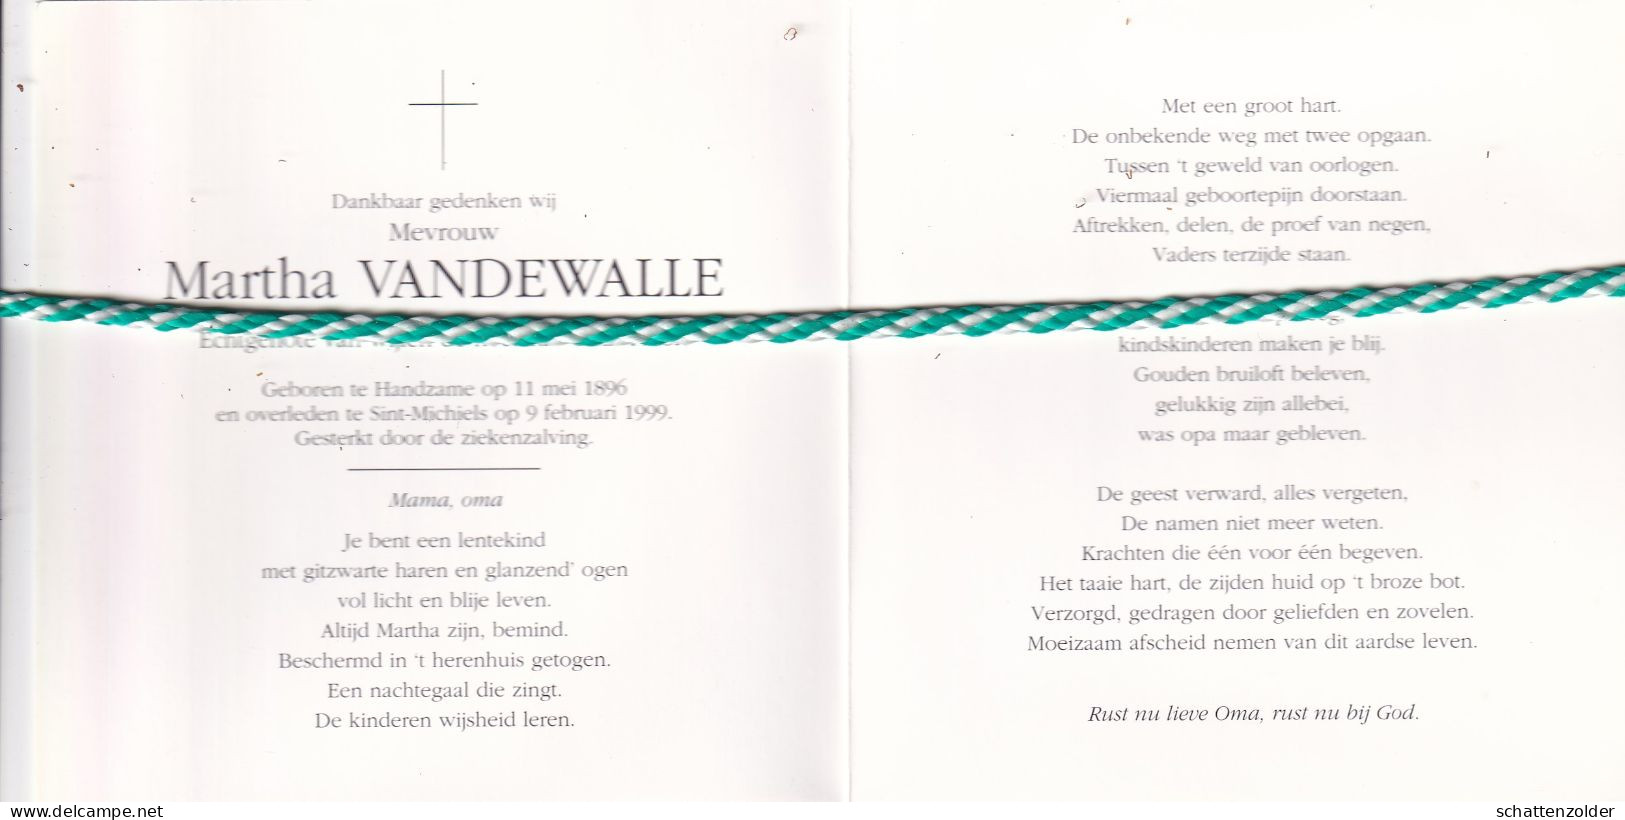 Martha Vandewalle-Gellynck, Handzame 1896, Sint-Michiels 1999. Honderdjarige. Foto - Overlijden